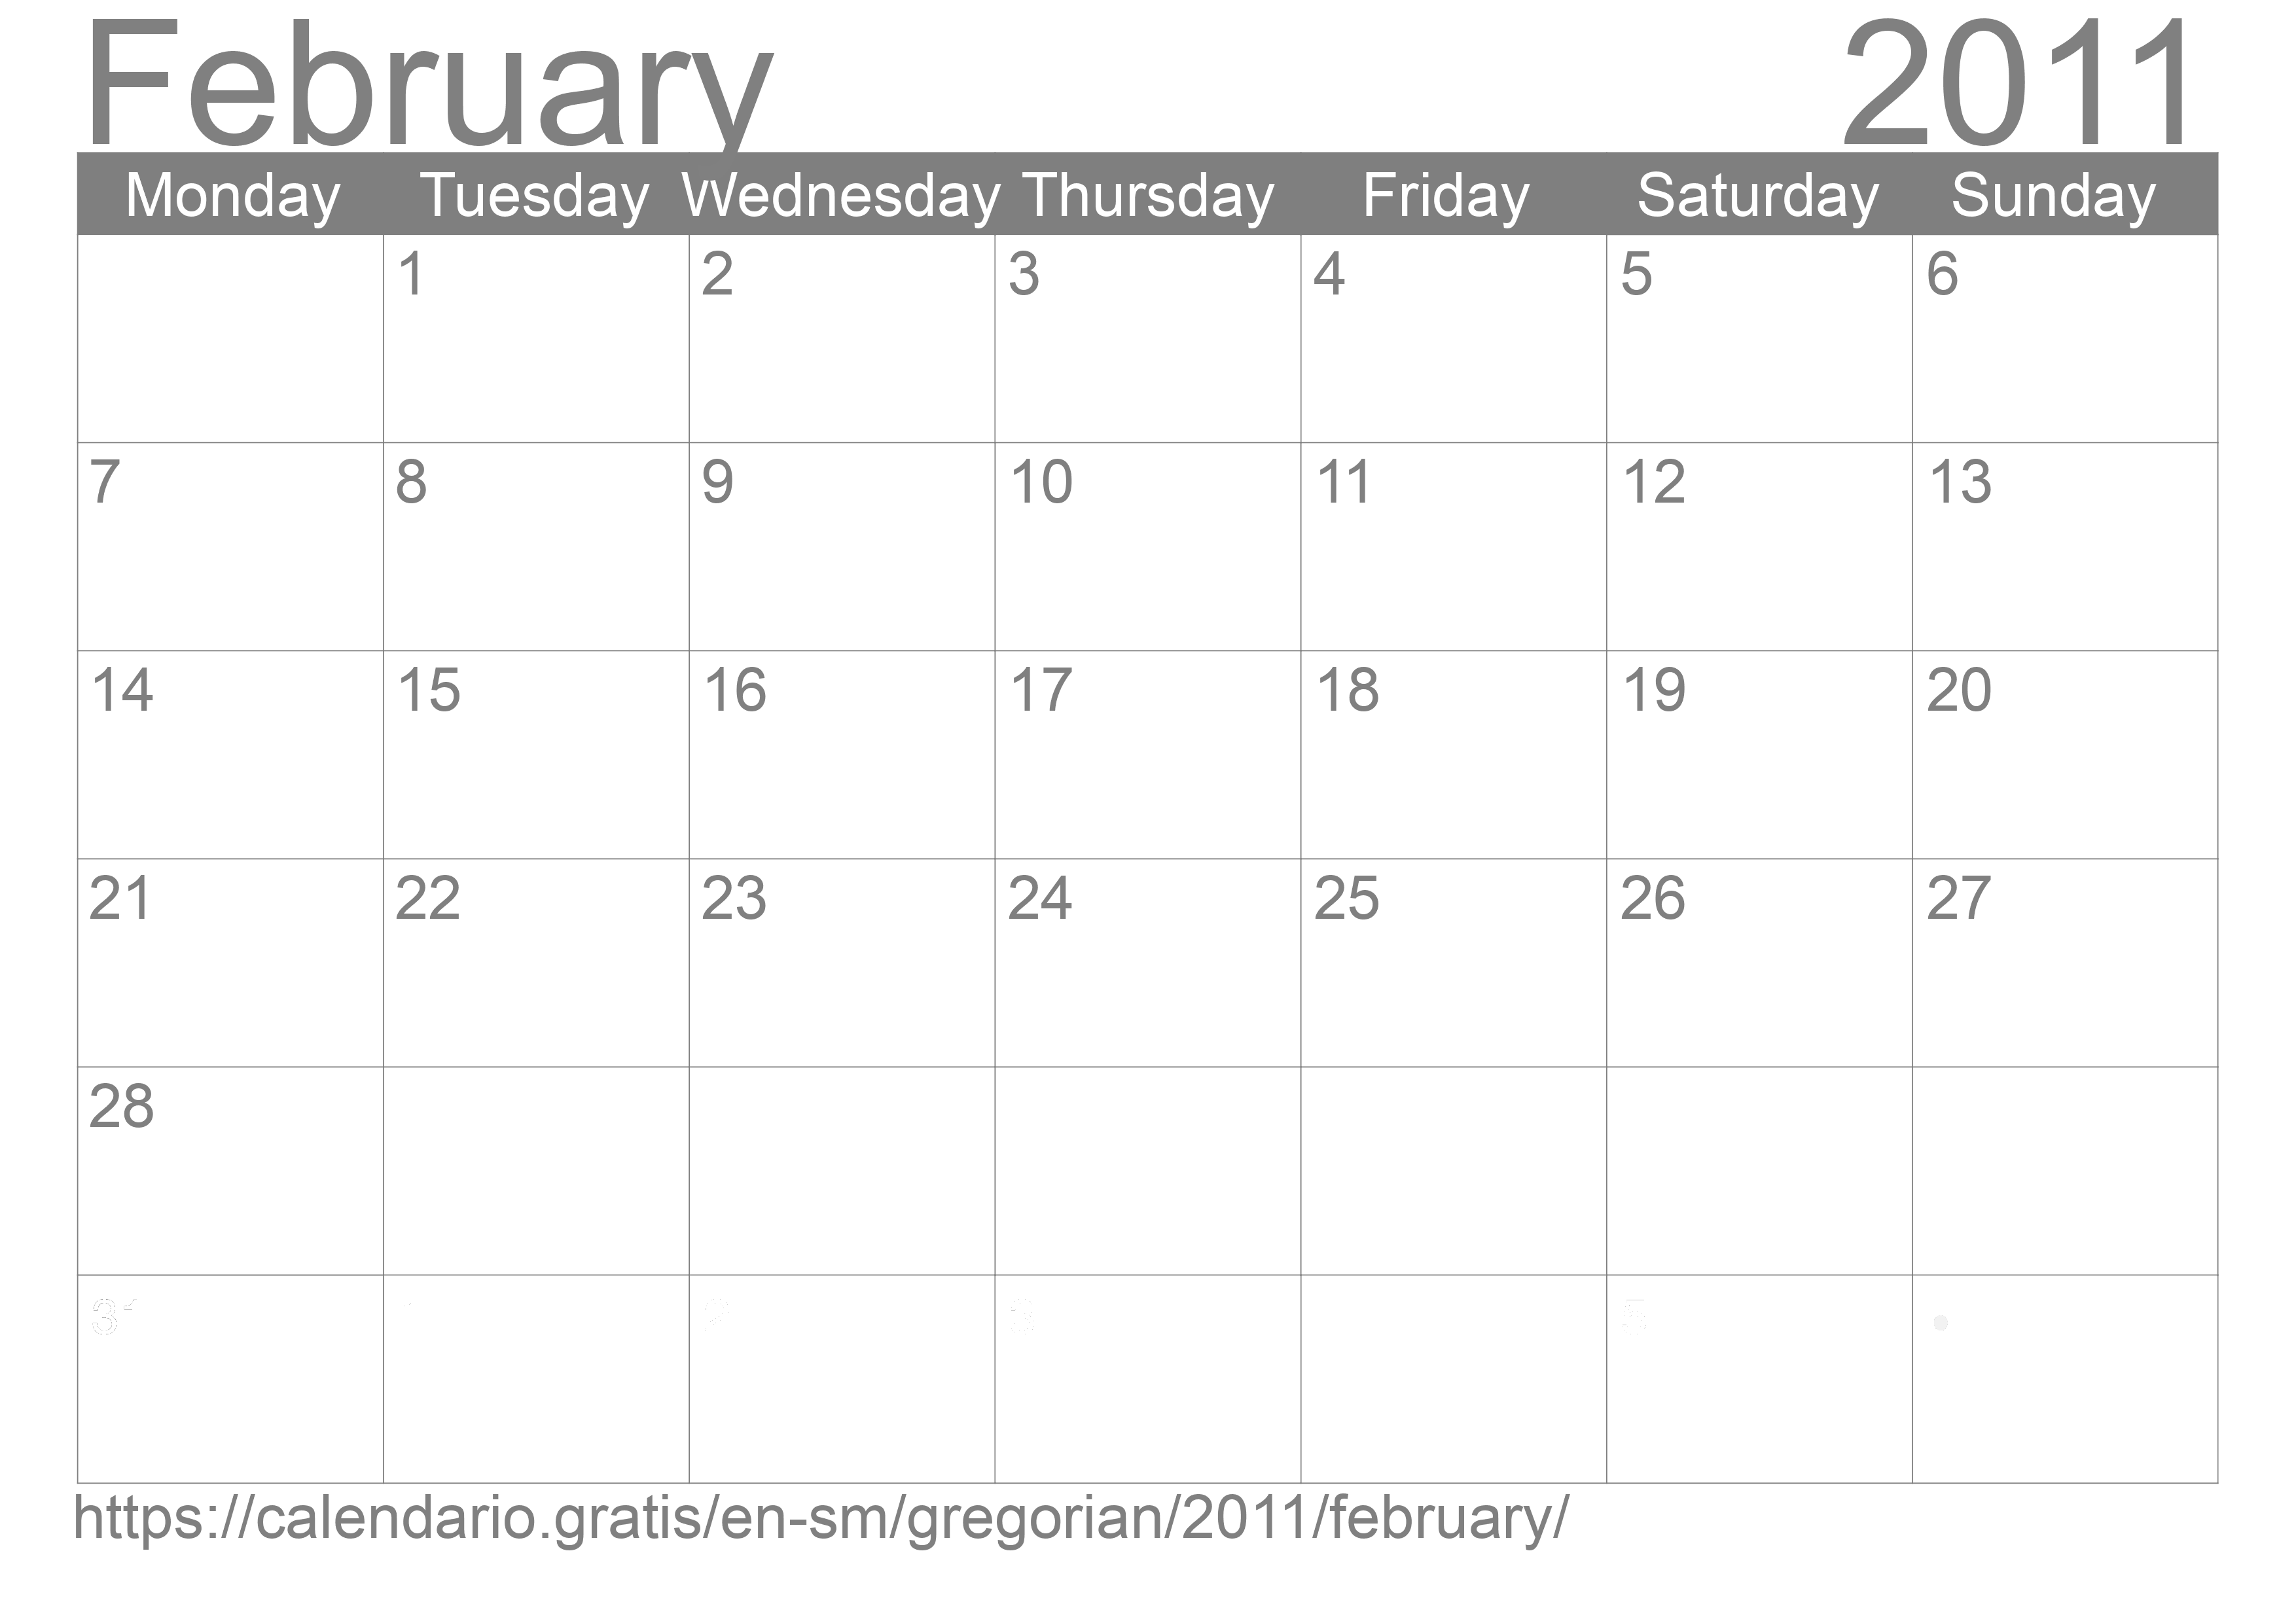 Calendar February 2011 to print